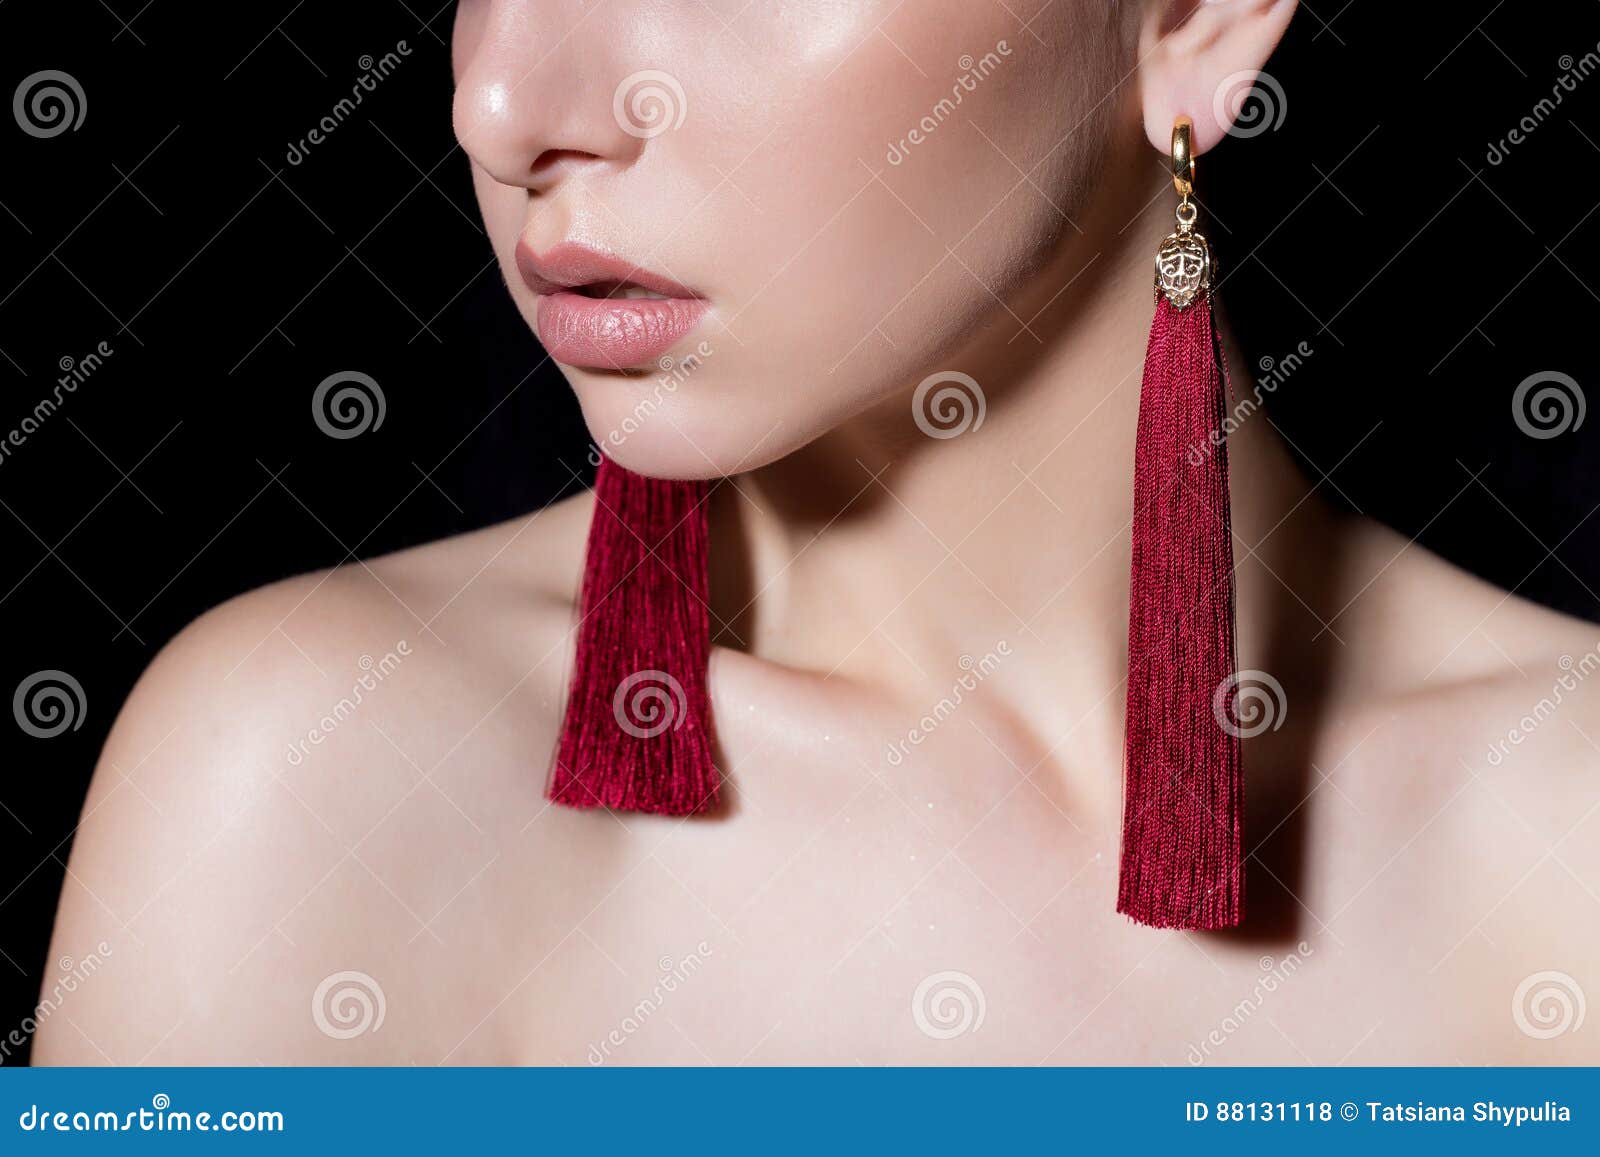 OLGA gold hoops earrings and natural freshwater pearls – LAURE de SAGAZAN